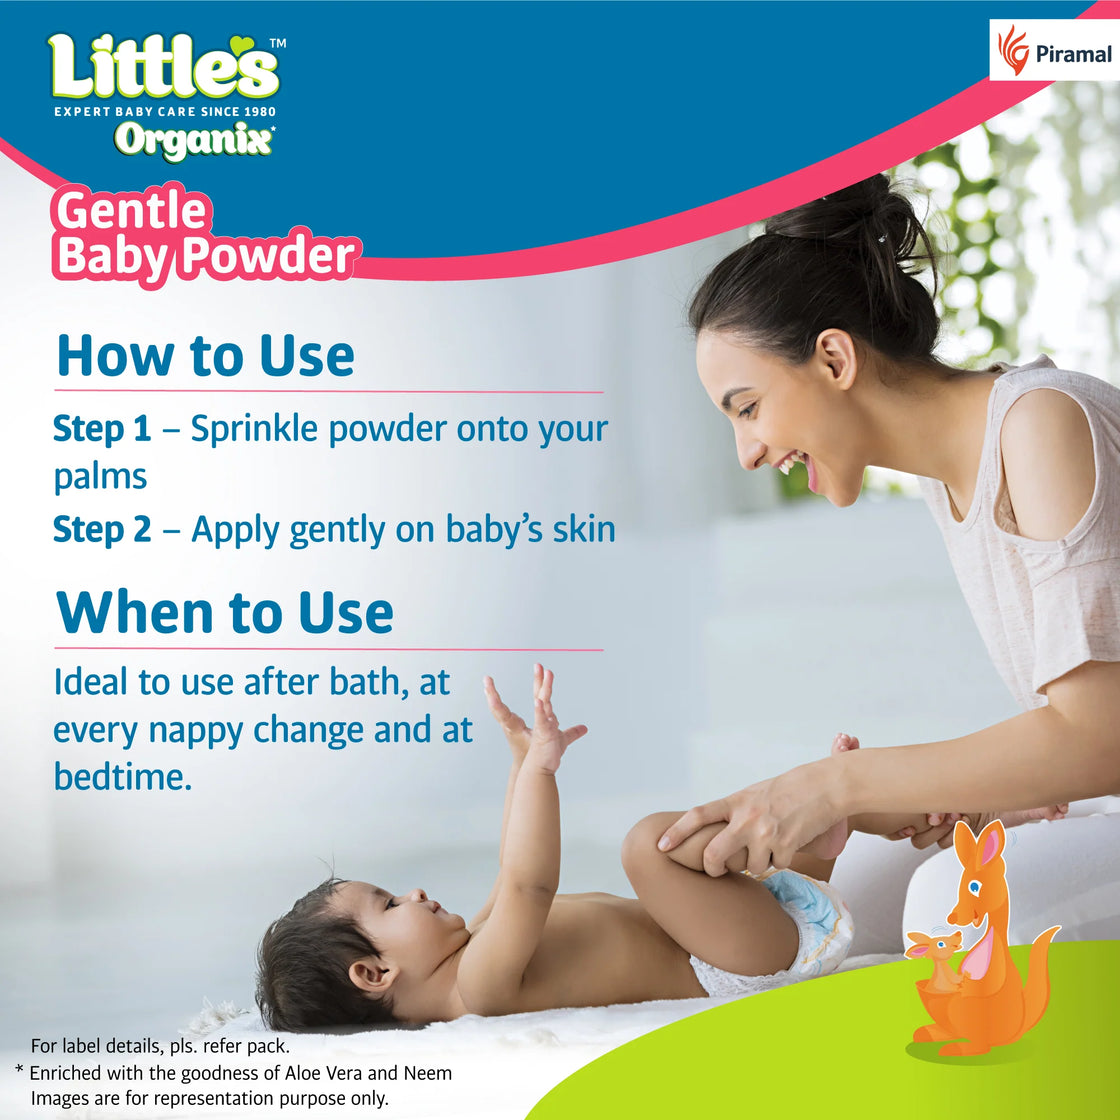  Little's Organix Gentle Baby Powder